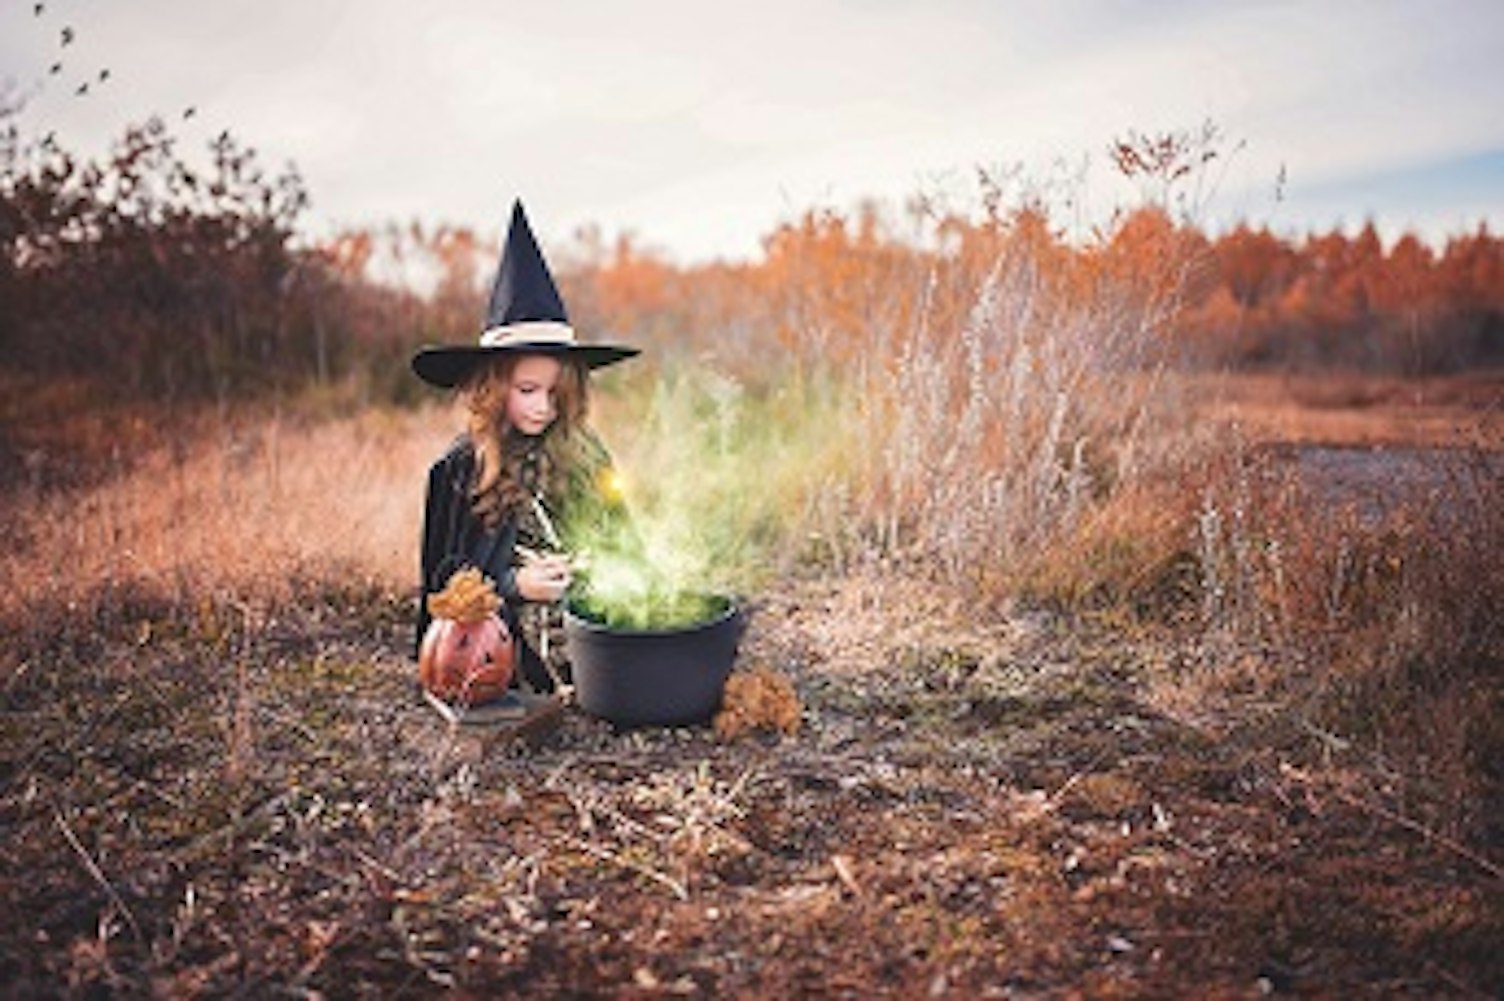 orig girl in witch costumeunsplash 344px